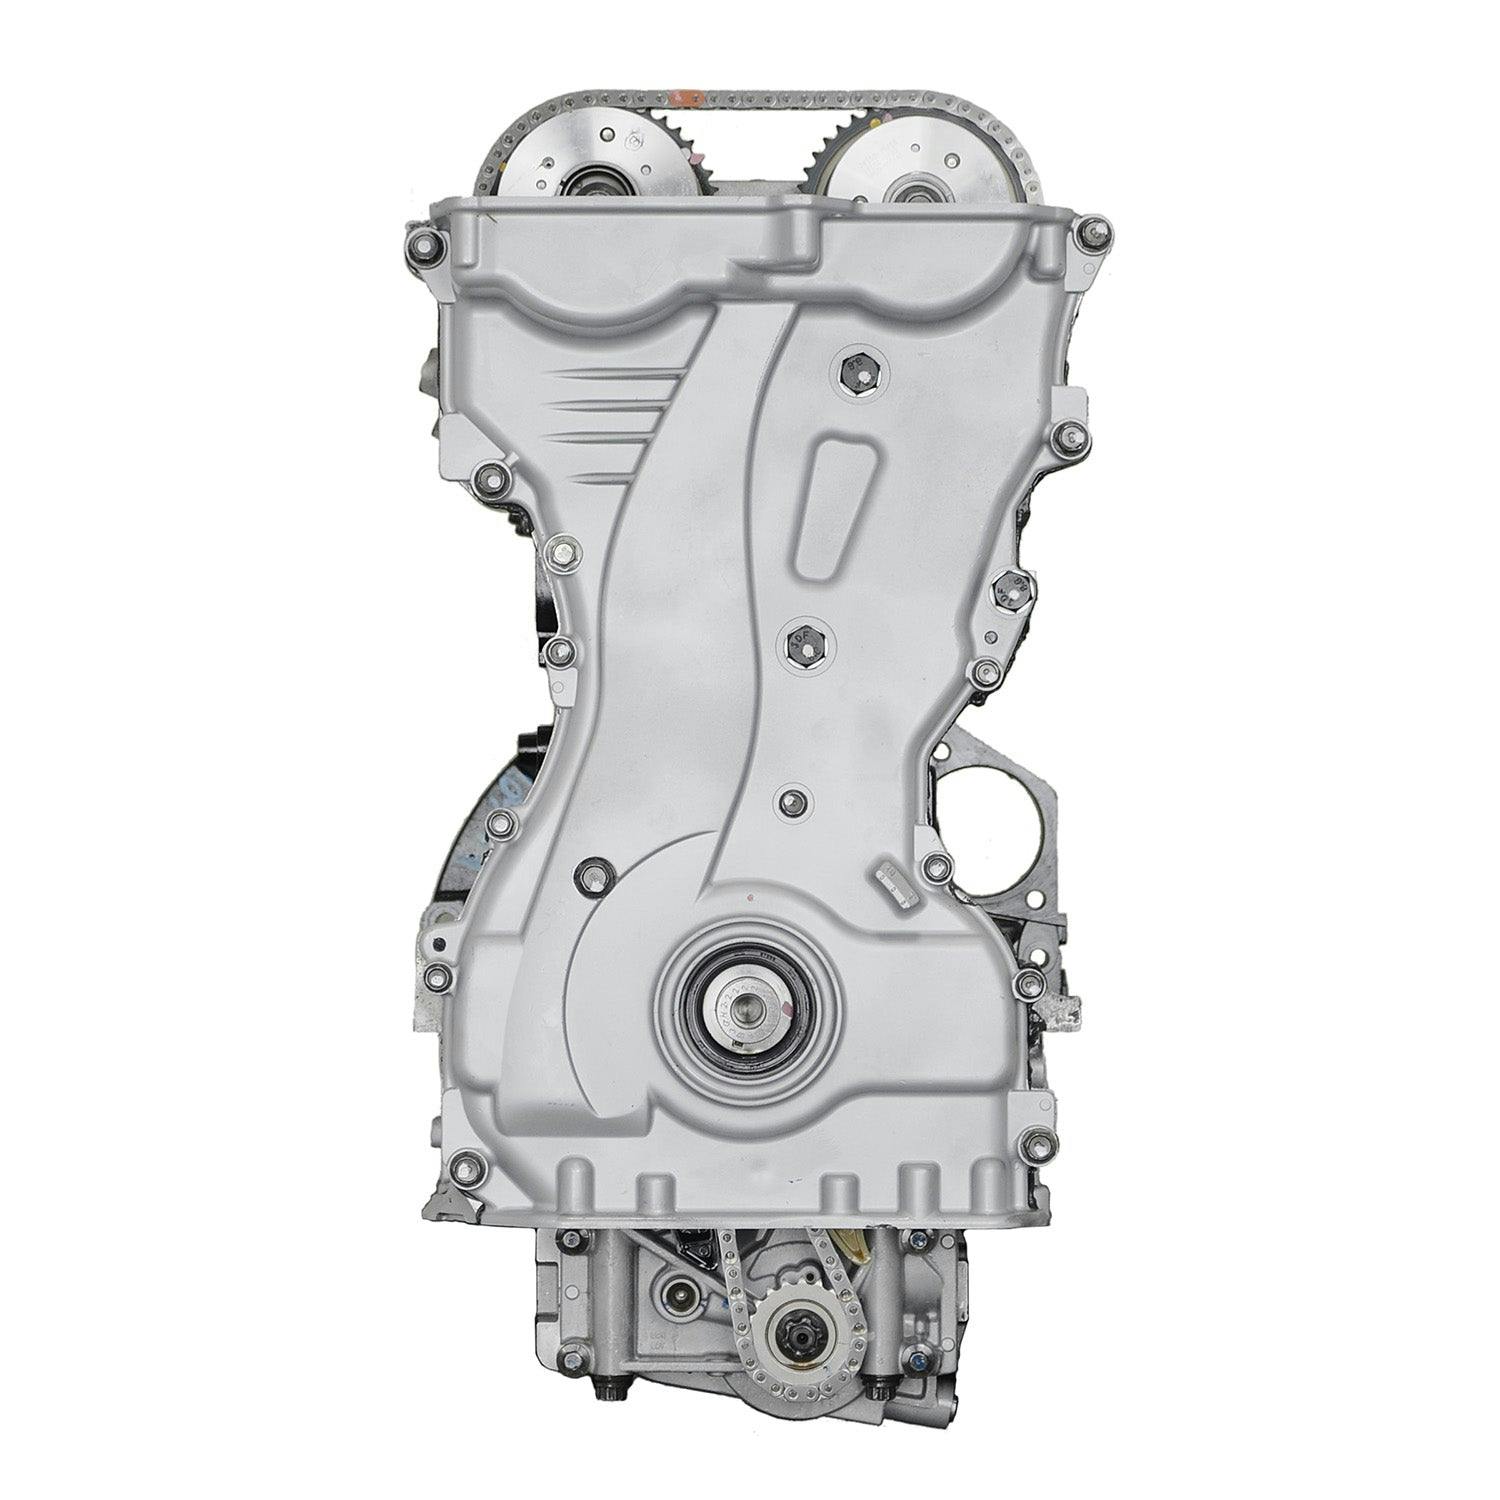 2.4L Inline-4 Engine for 2011-2015 Hyundai Sonata/Kia Optima